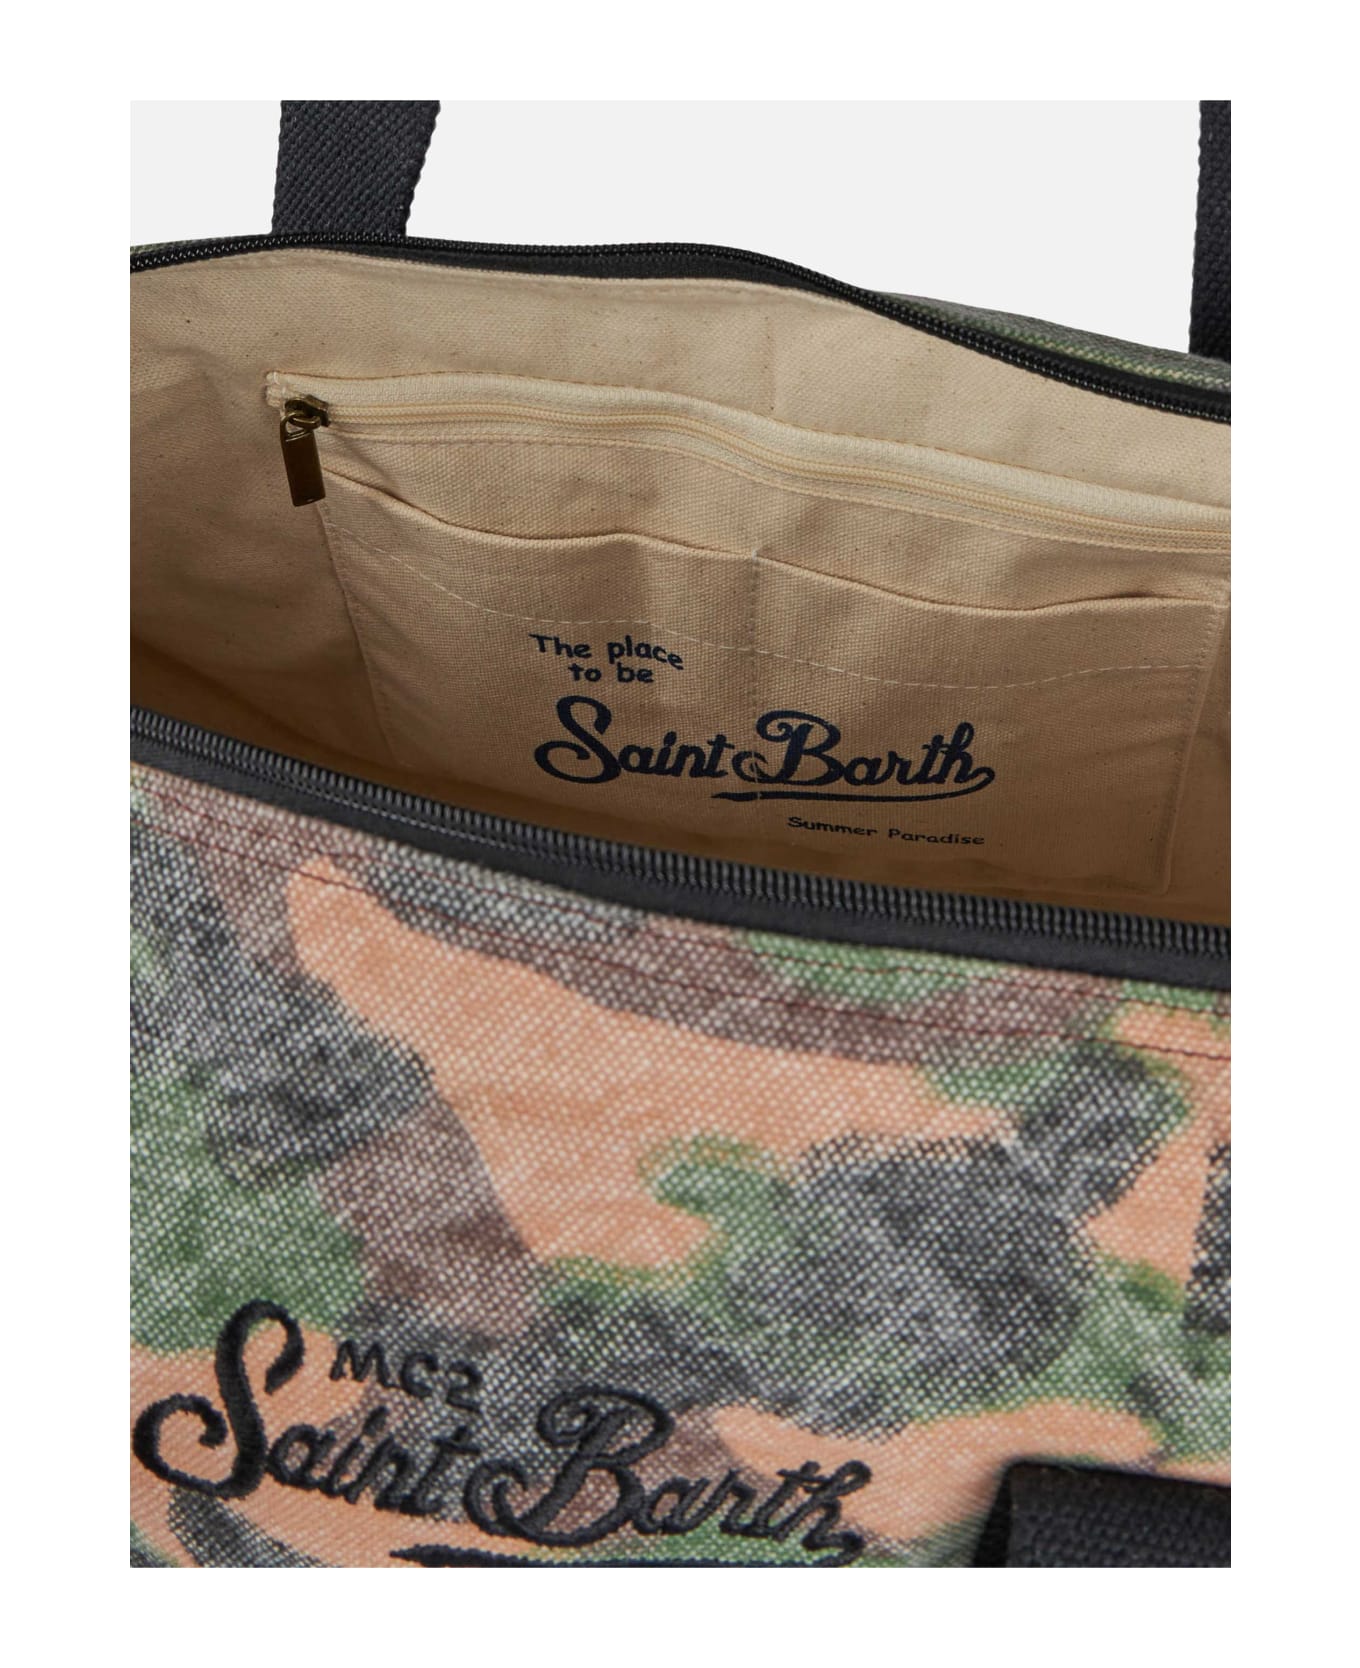 MC2 Saint Barth Travel Duffel Bag With Camouflage Print - GREEN トラベルバッグ